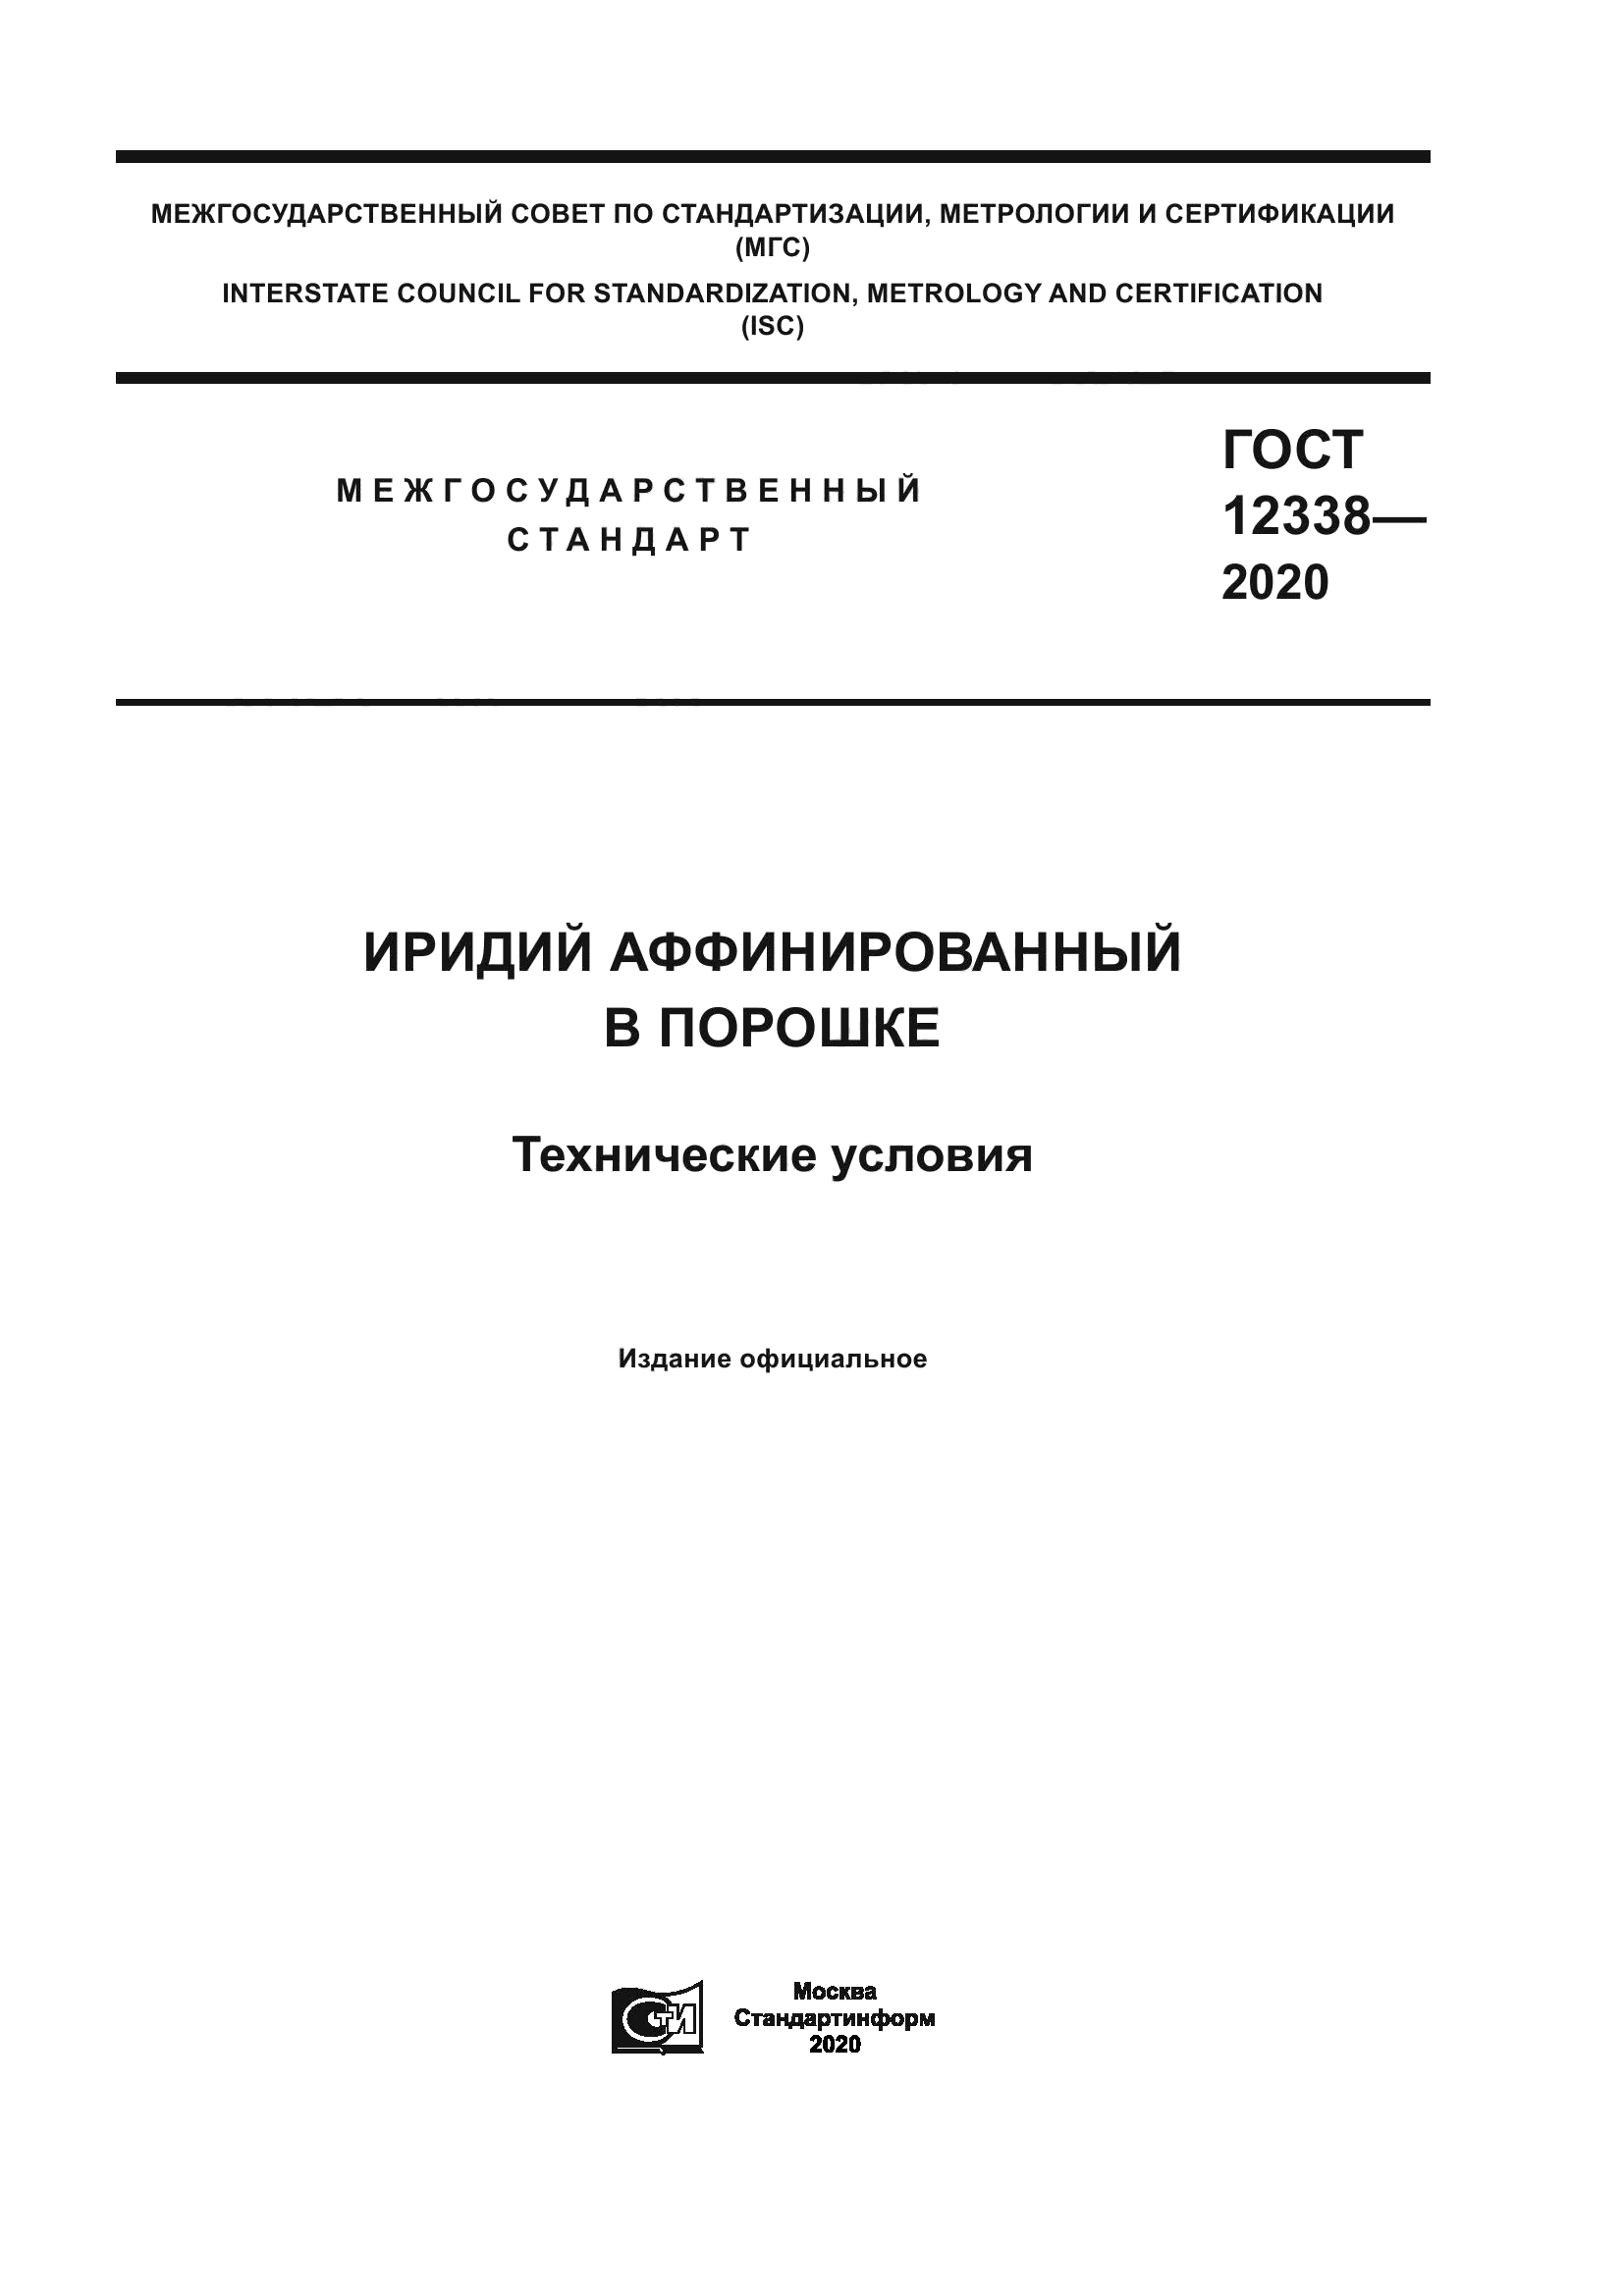 ГОСТ 12338-2020